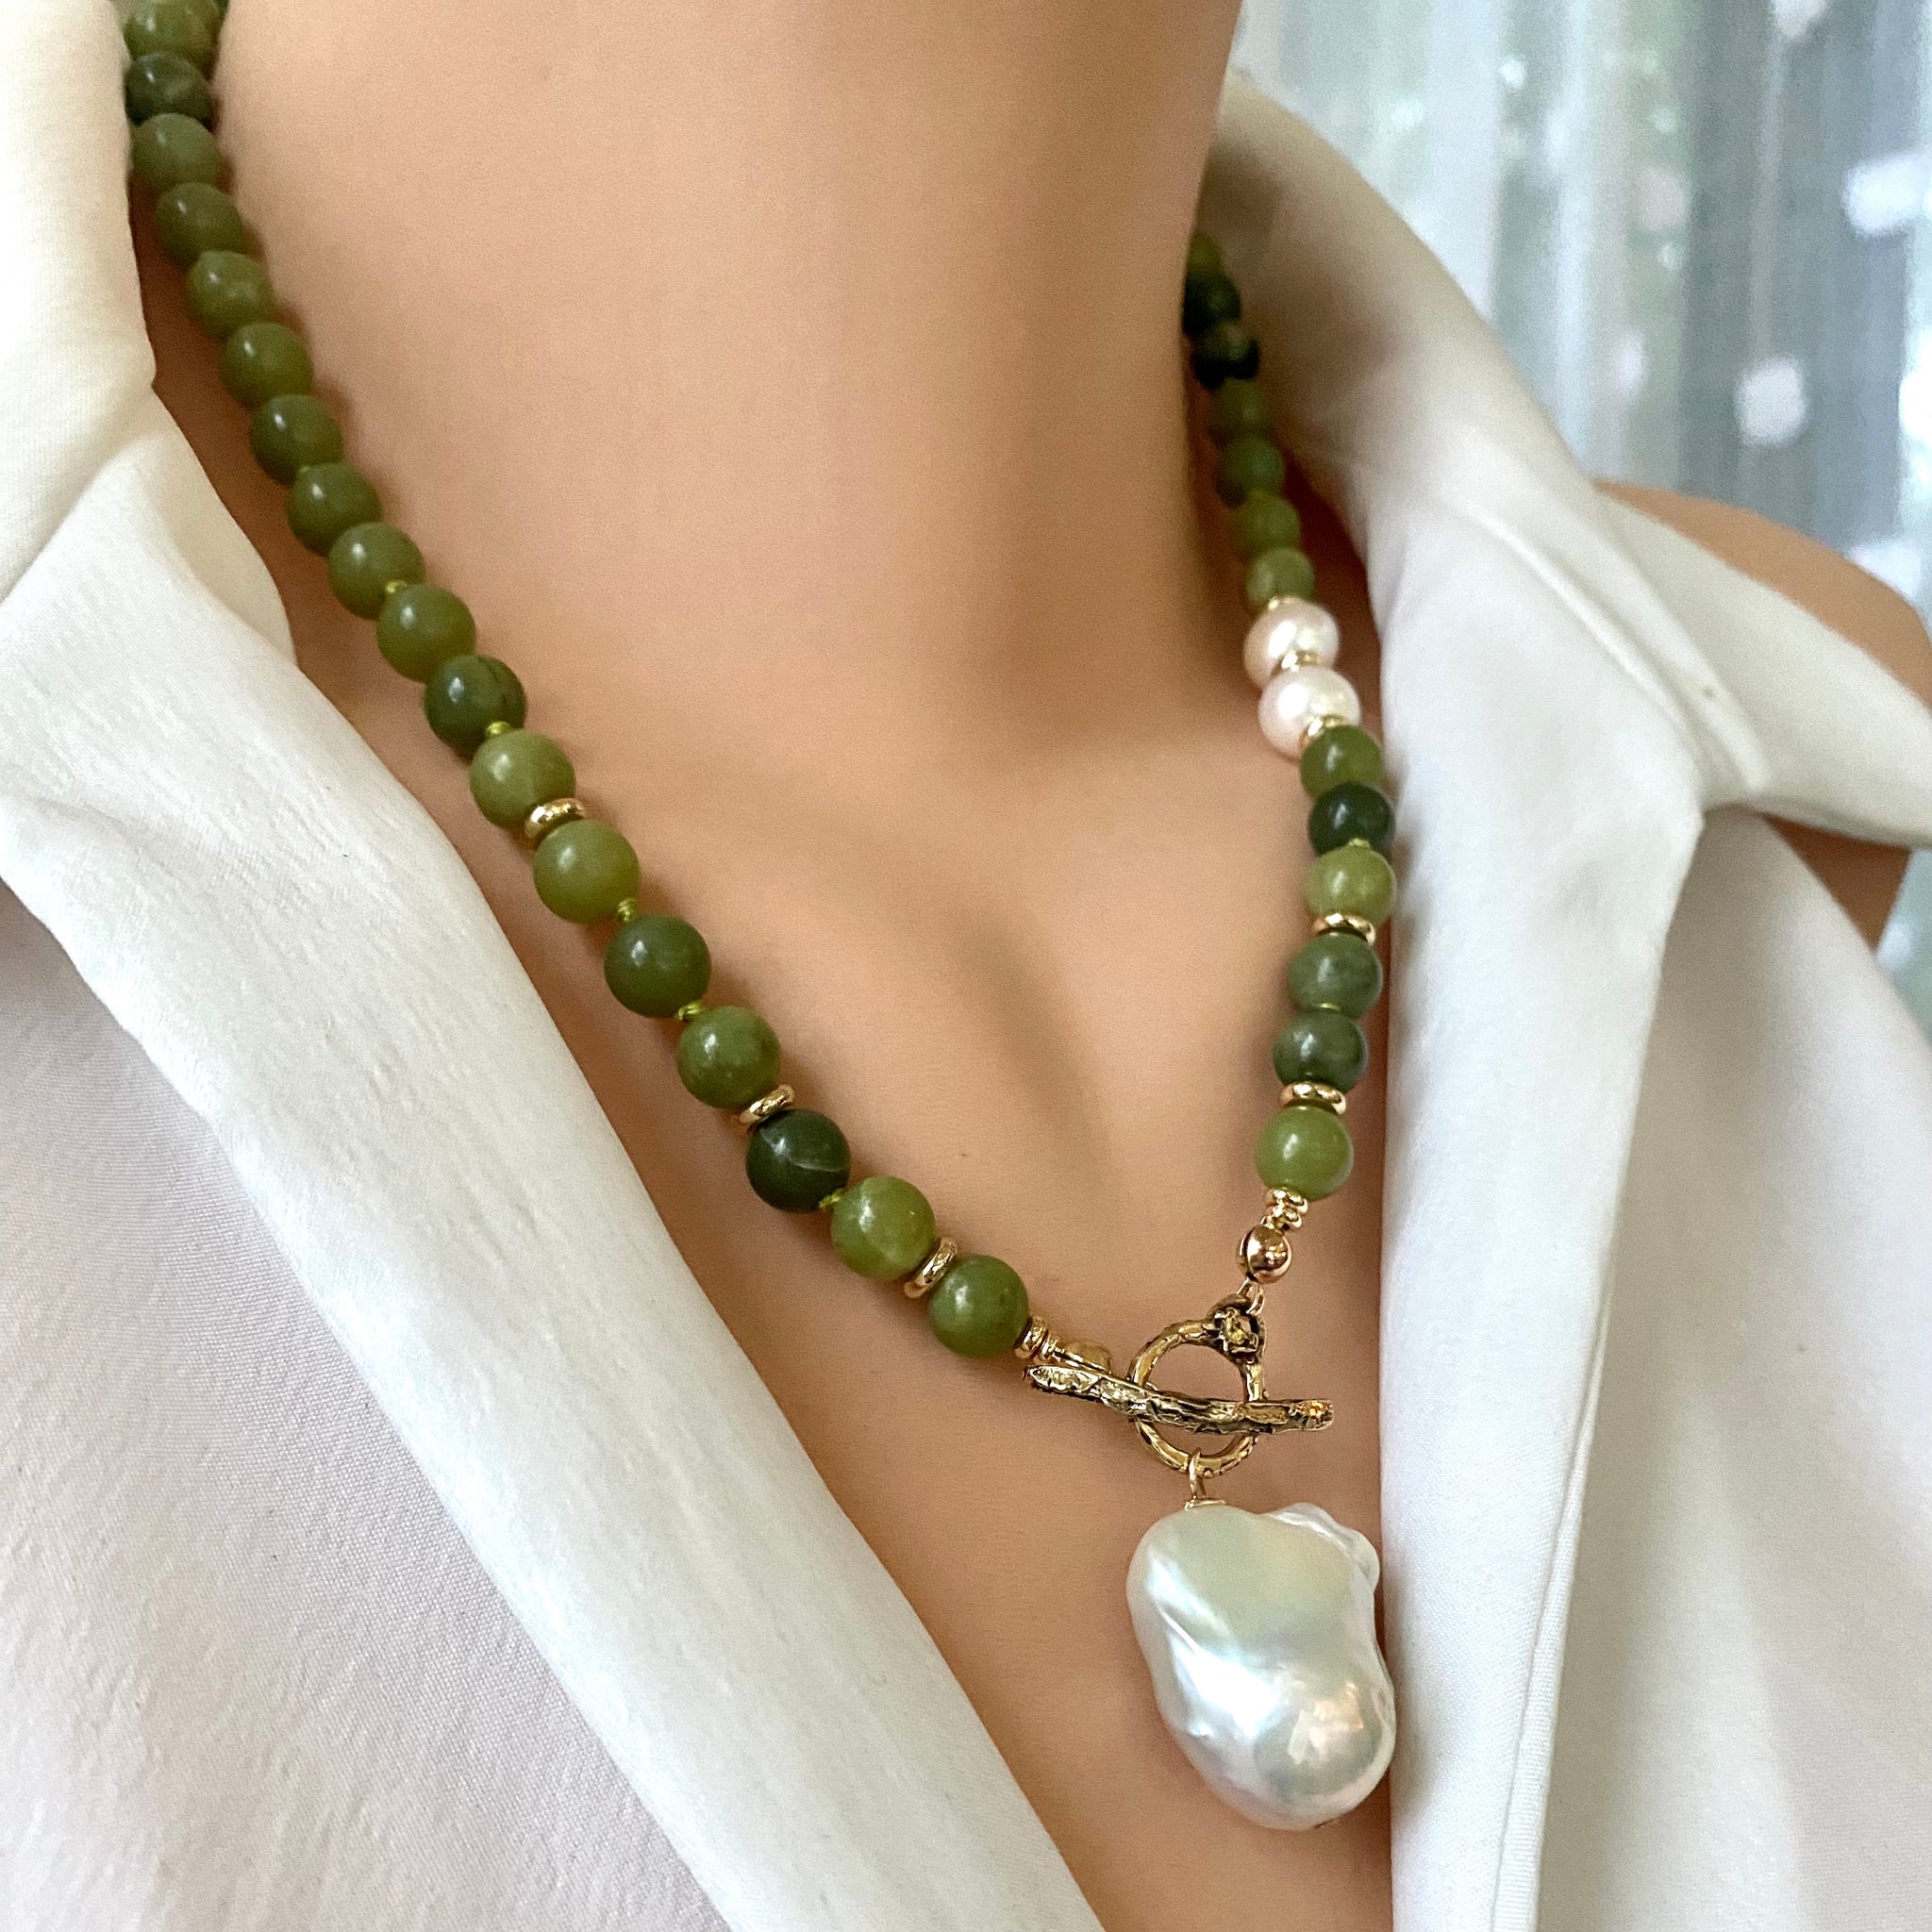 Buy Siberian Nephrite Jade Bead Necklace 10mm Beads Natural Jade Green Jade  Authentic Jade Online in India - Etsy